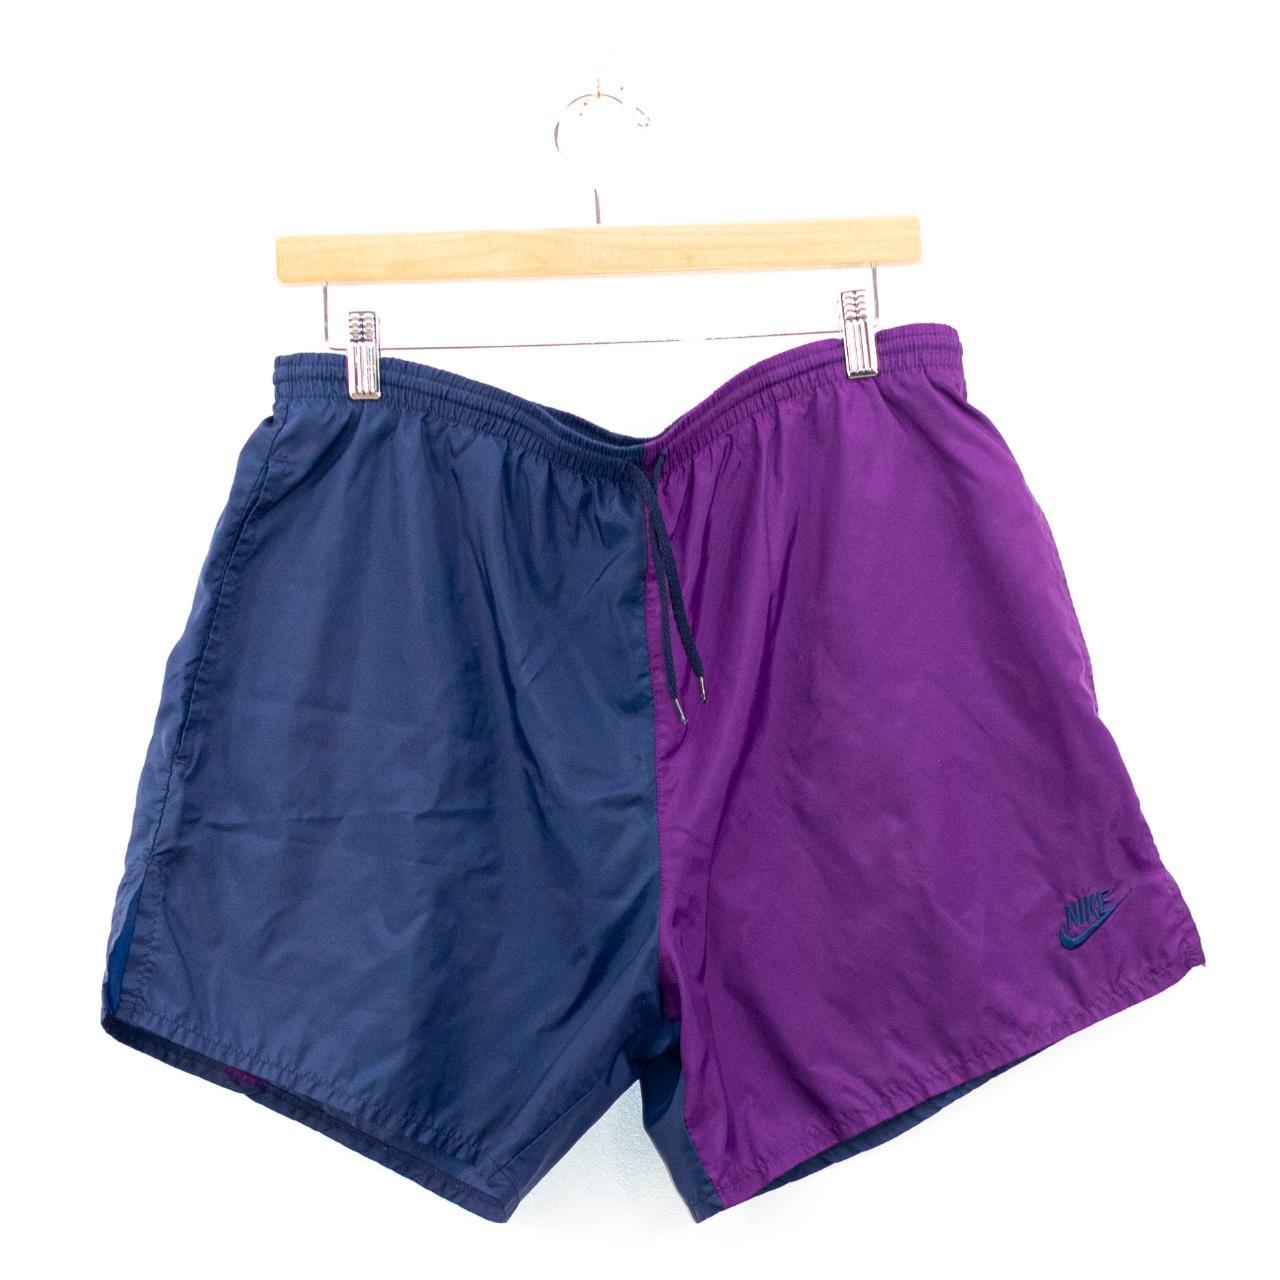 Nike Men's Navy and Purple Swim-briefs-shorts